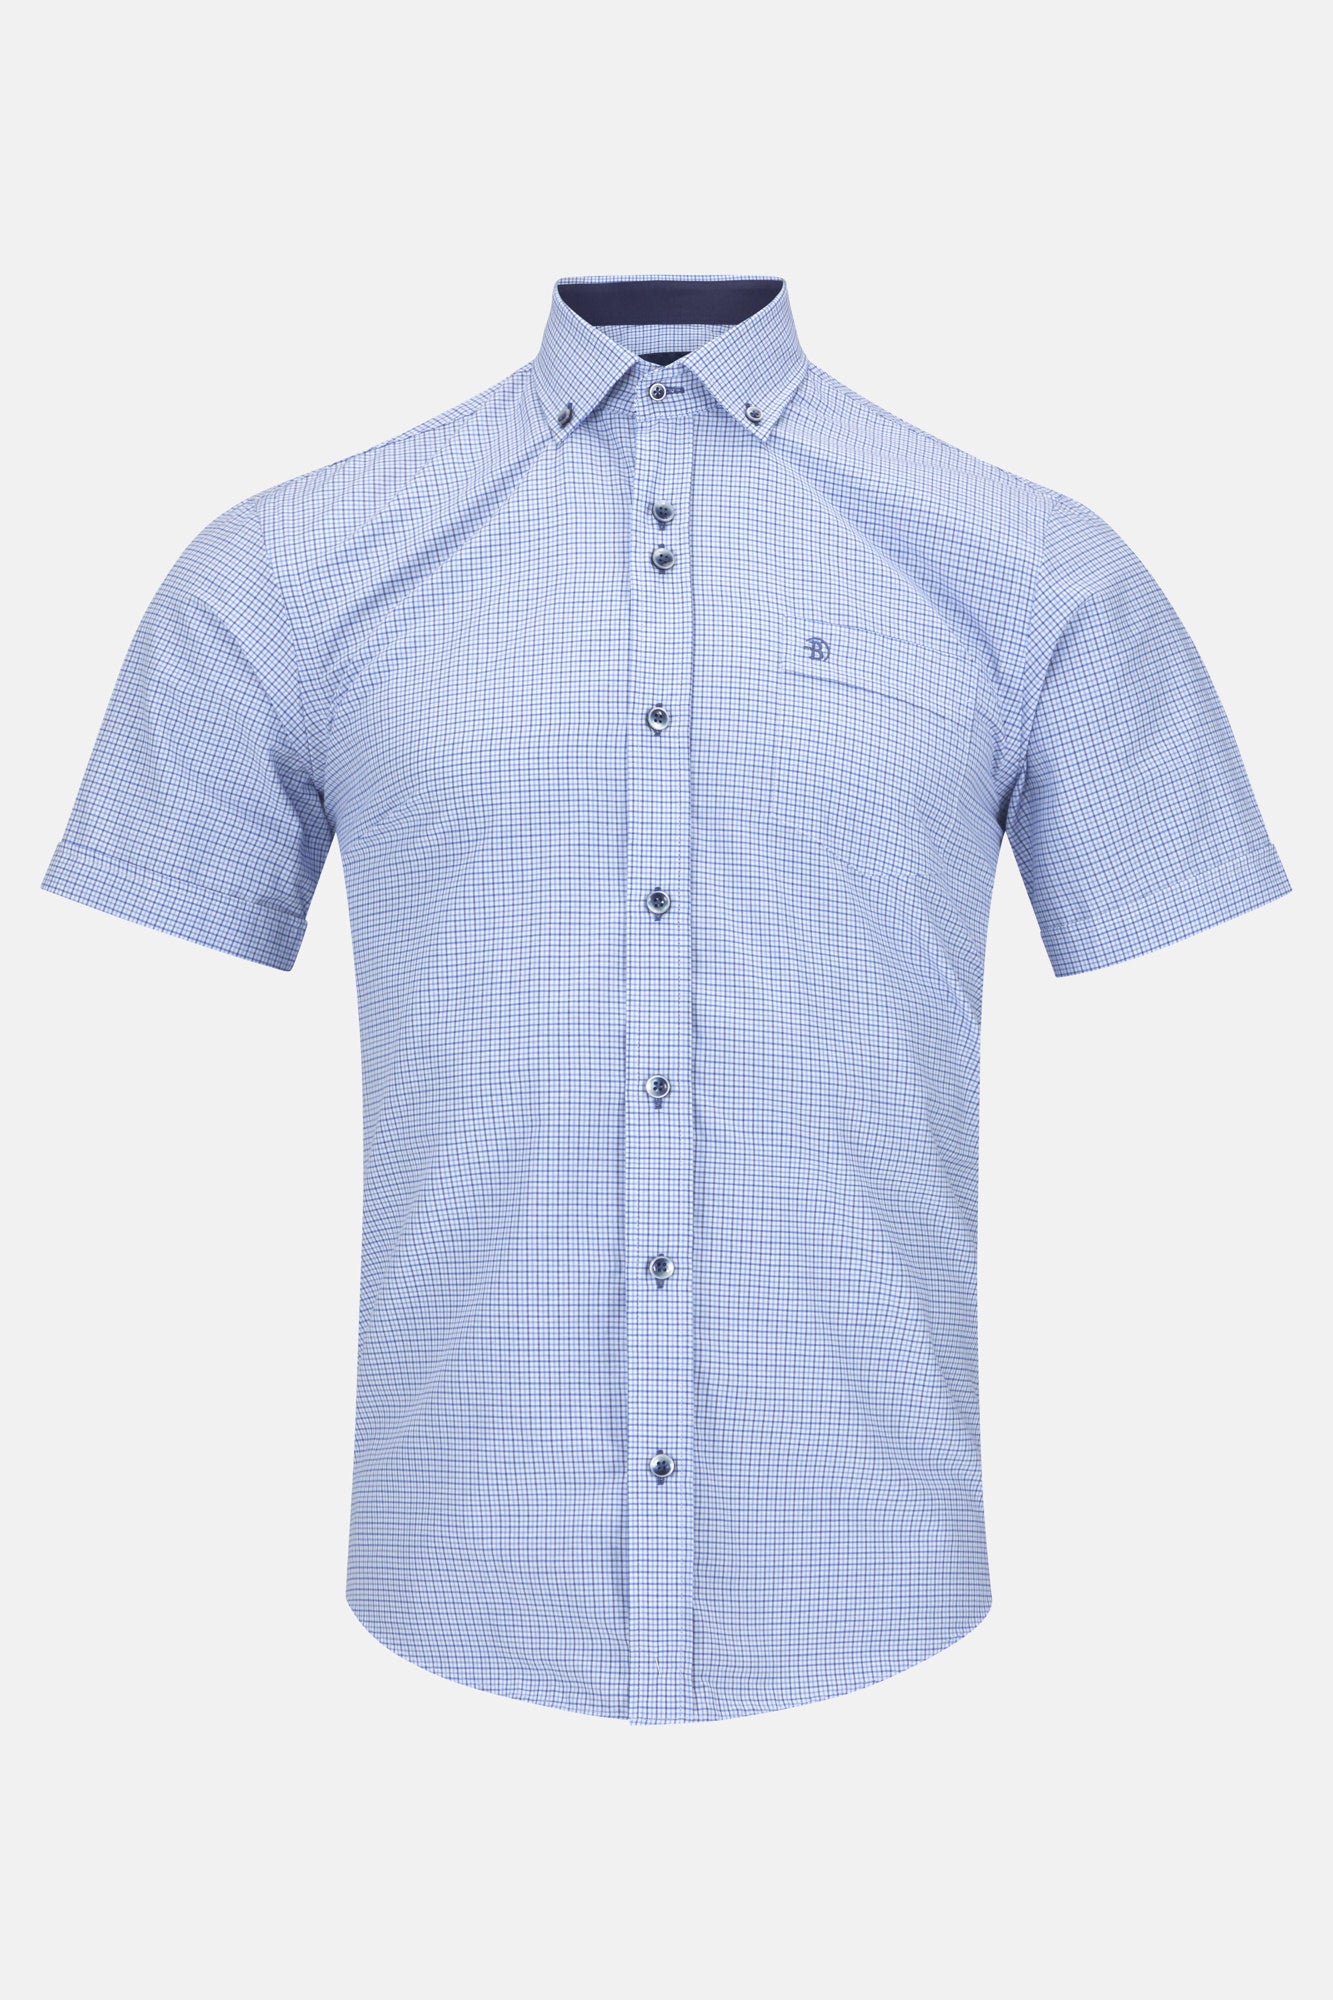 Milo Blue Short Sleeve Shirt By Benetti Menswear 